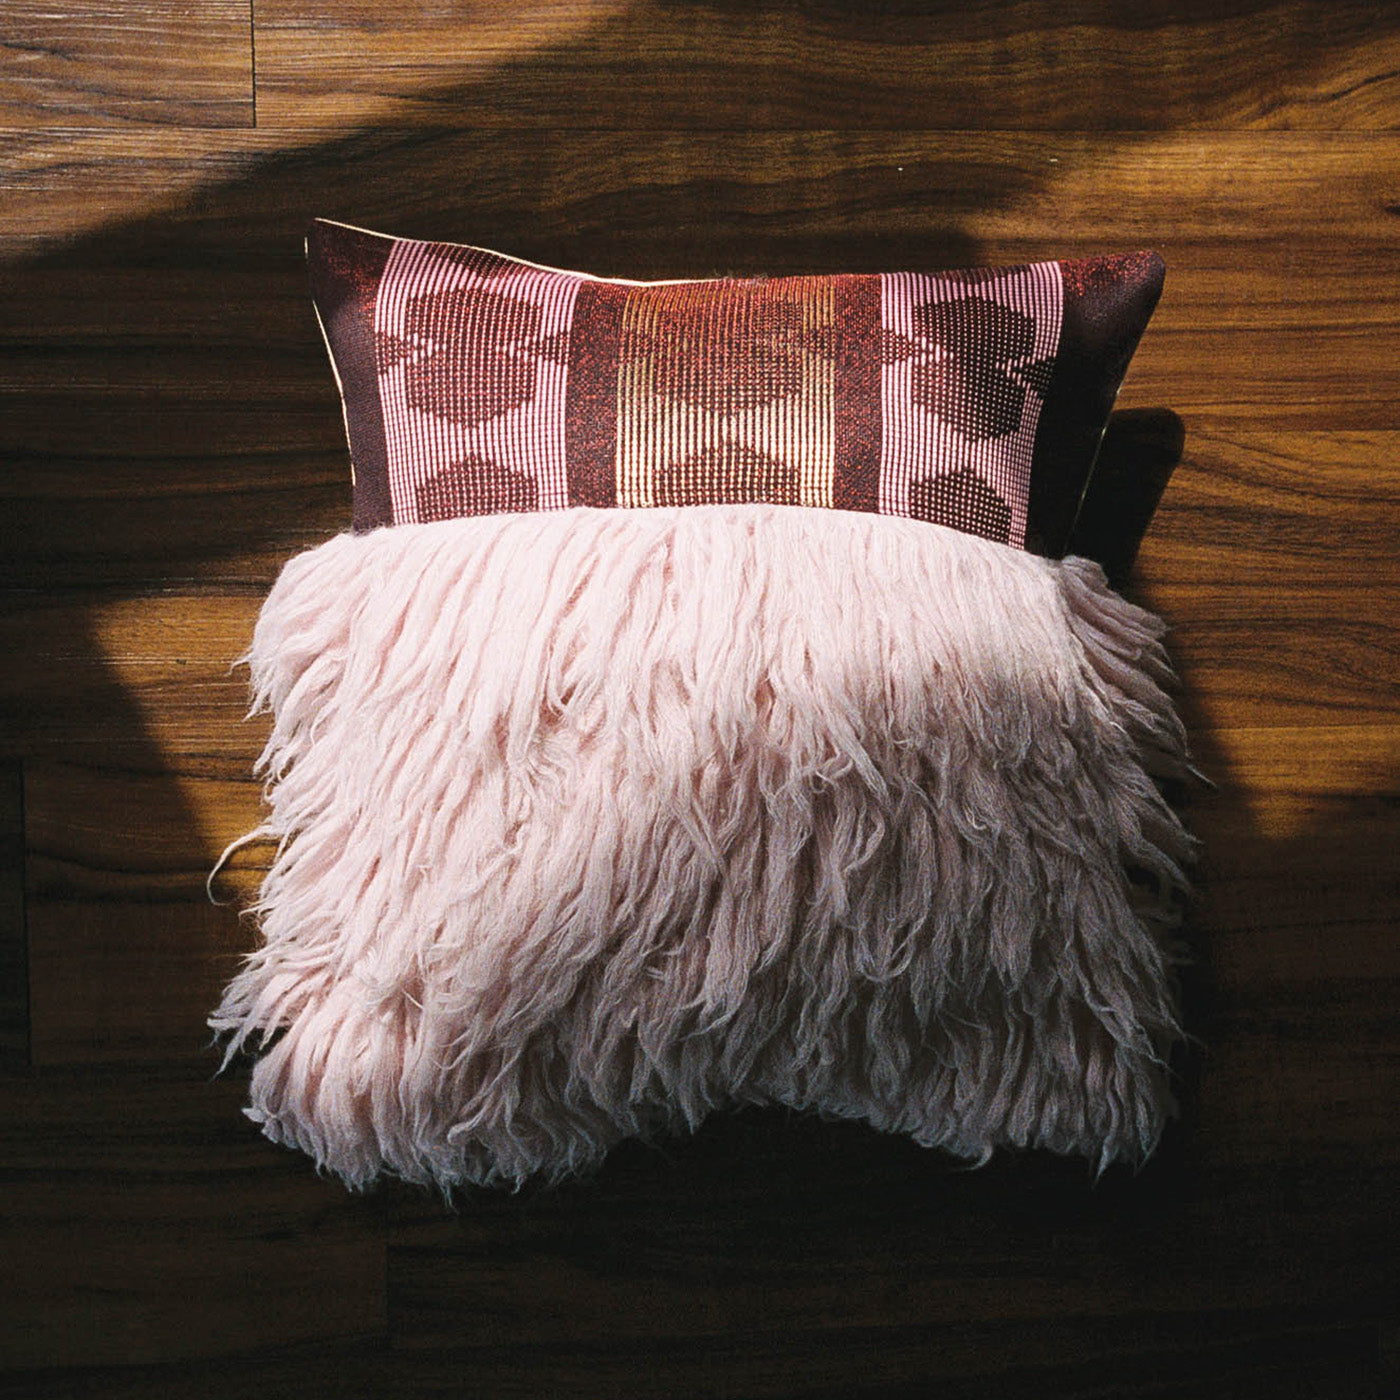 Geometric Pattern Textured Throw Pillow on Wood